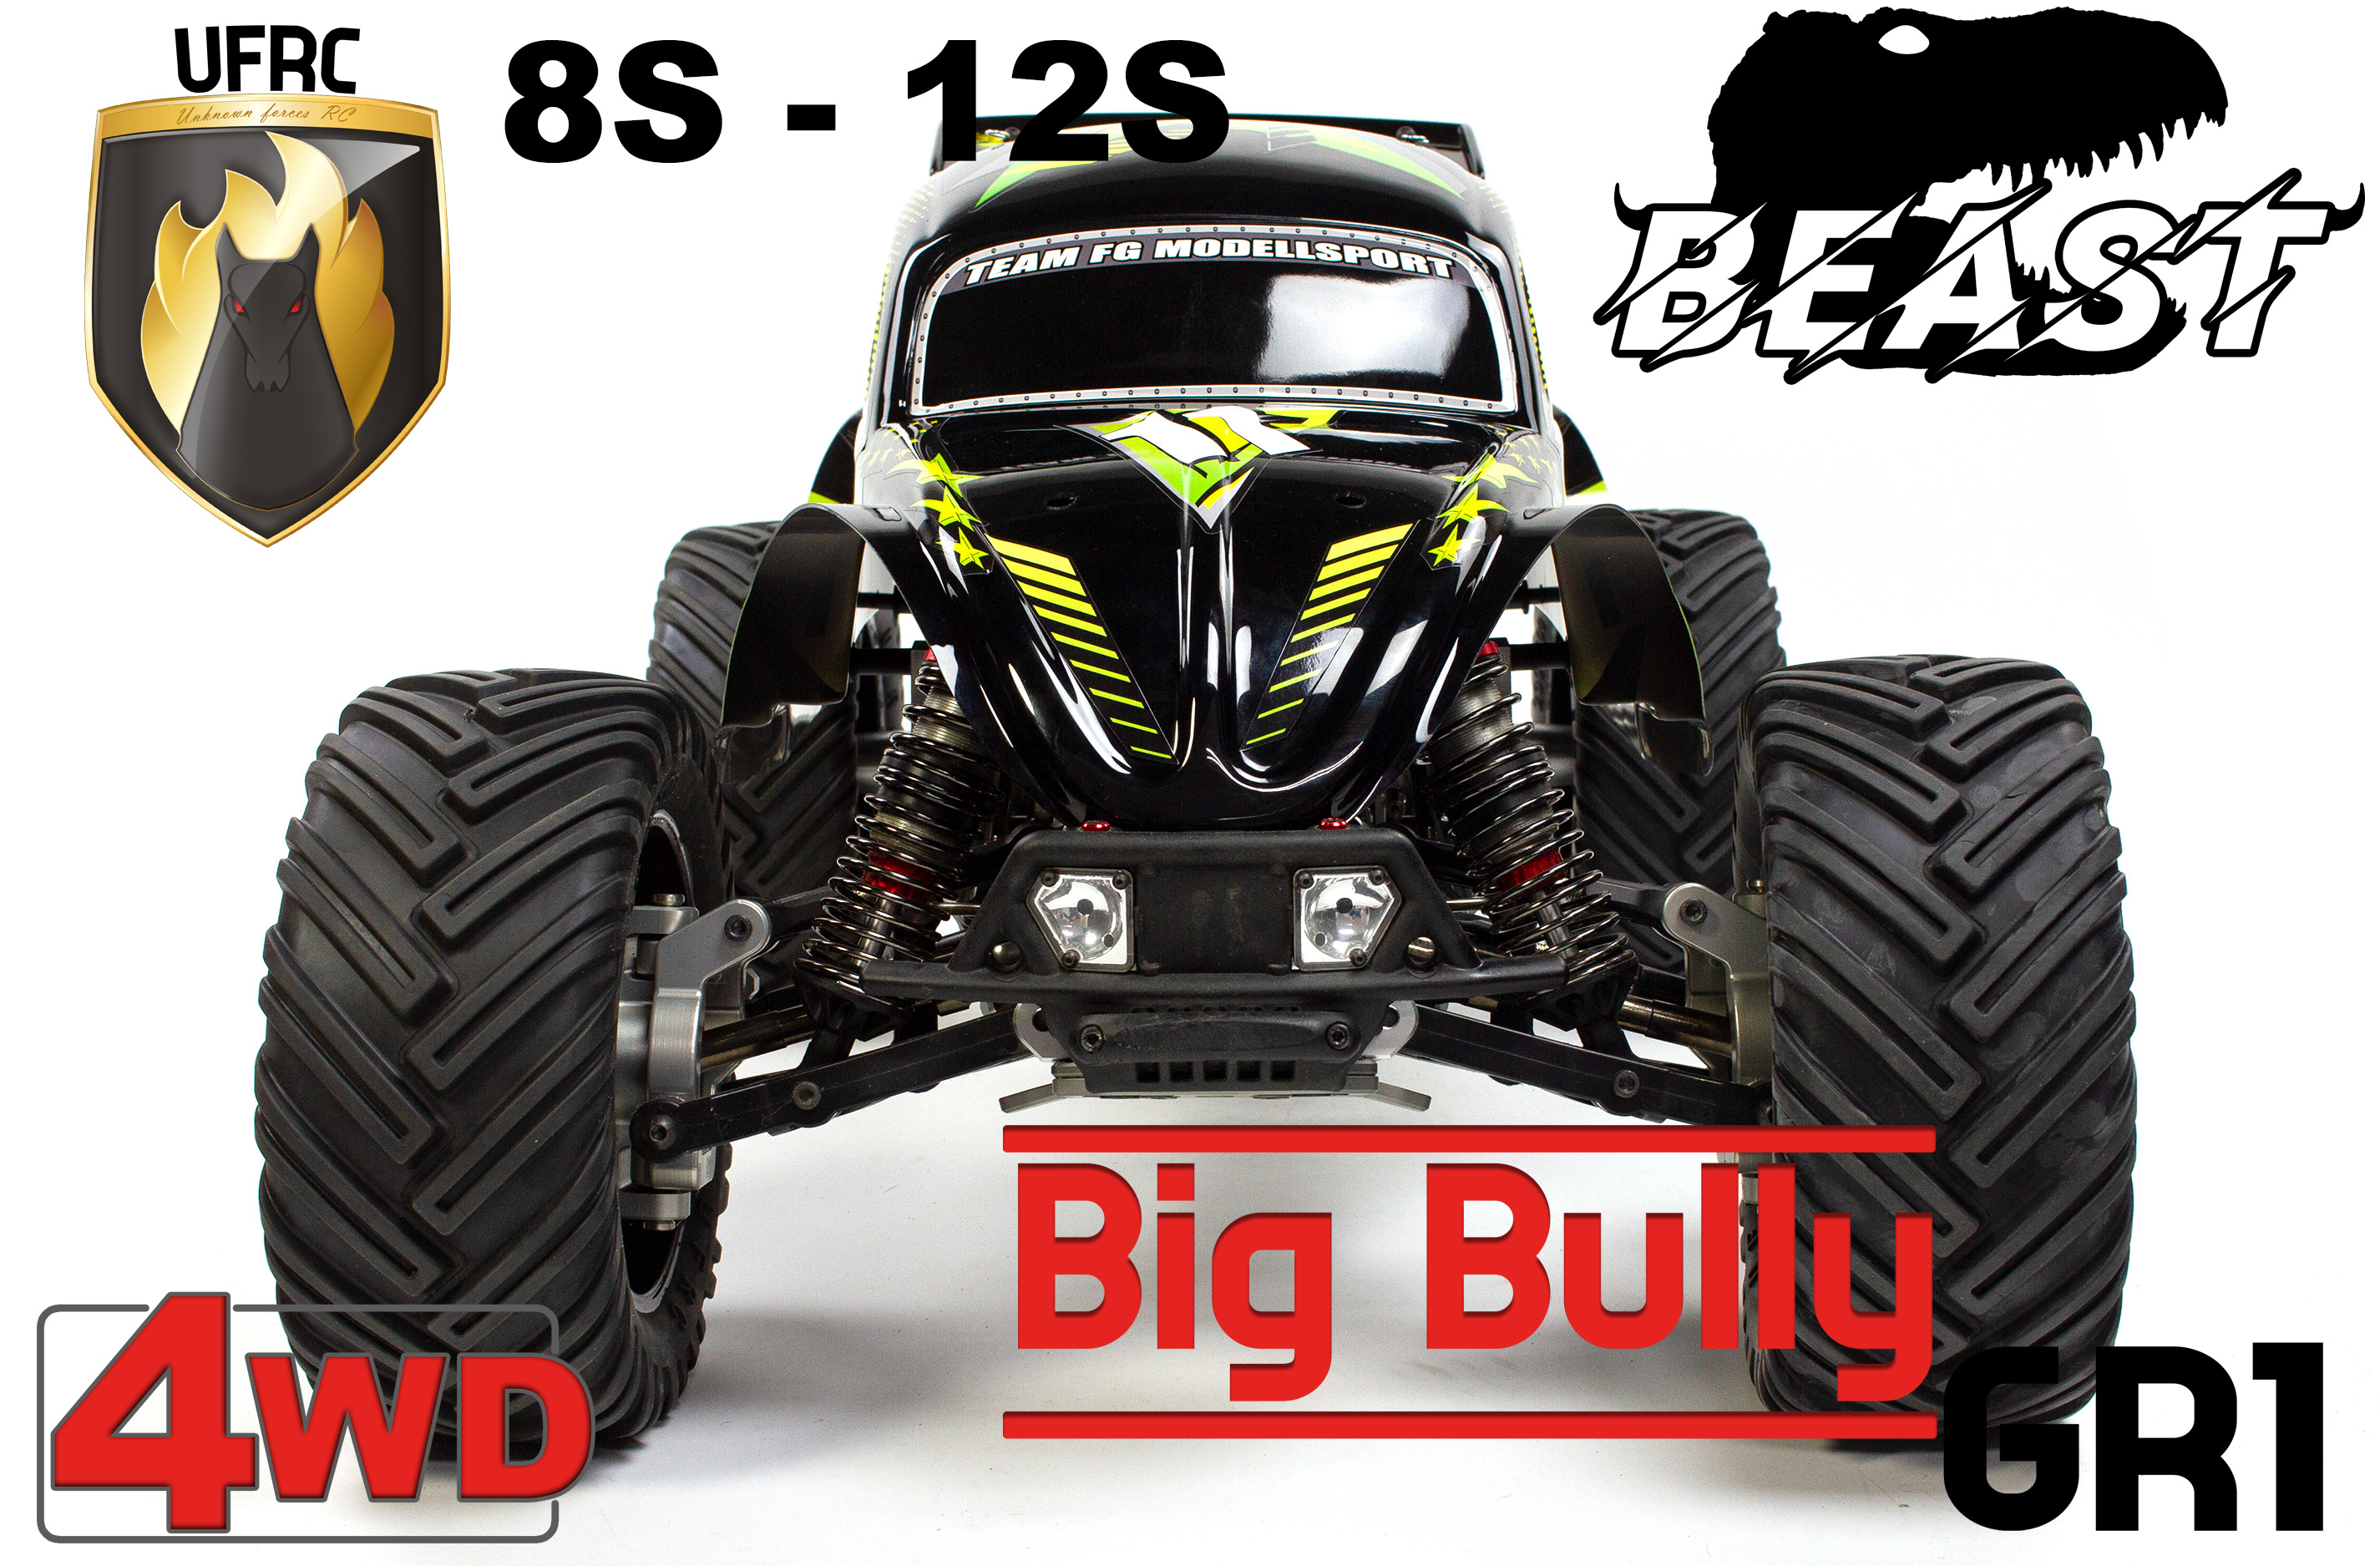 UFRC Big Bully GR1 4WD 1:5 Brushless Buggy